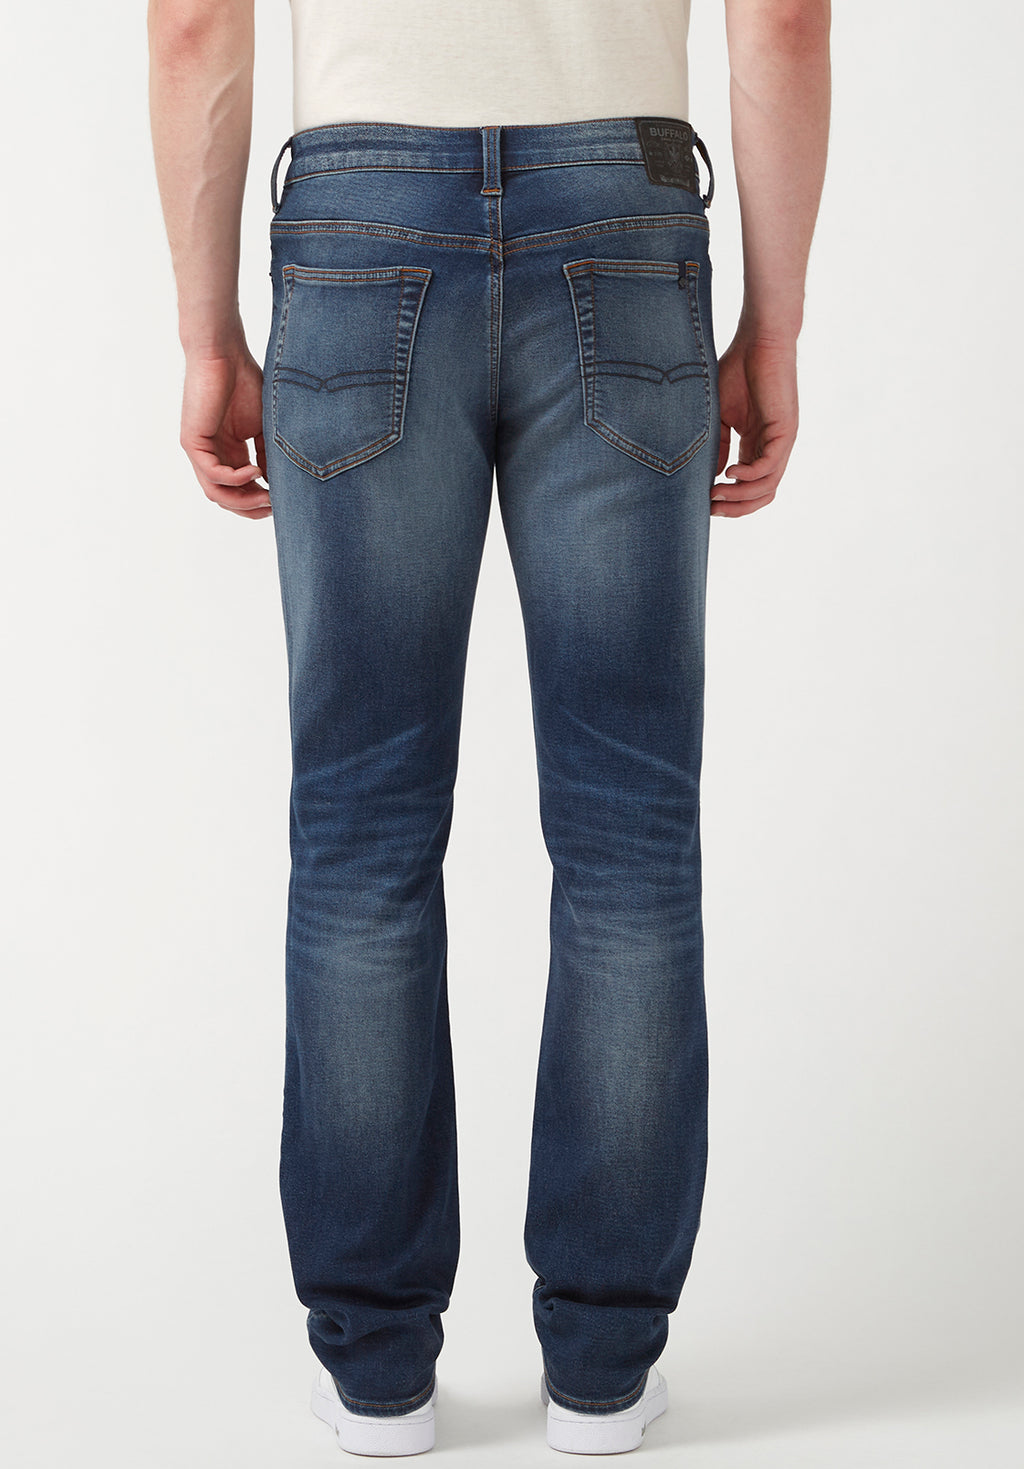 Straight Six Indigo Men's Fleece Jeans - BM22946